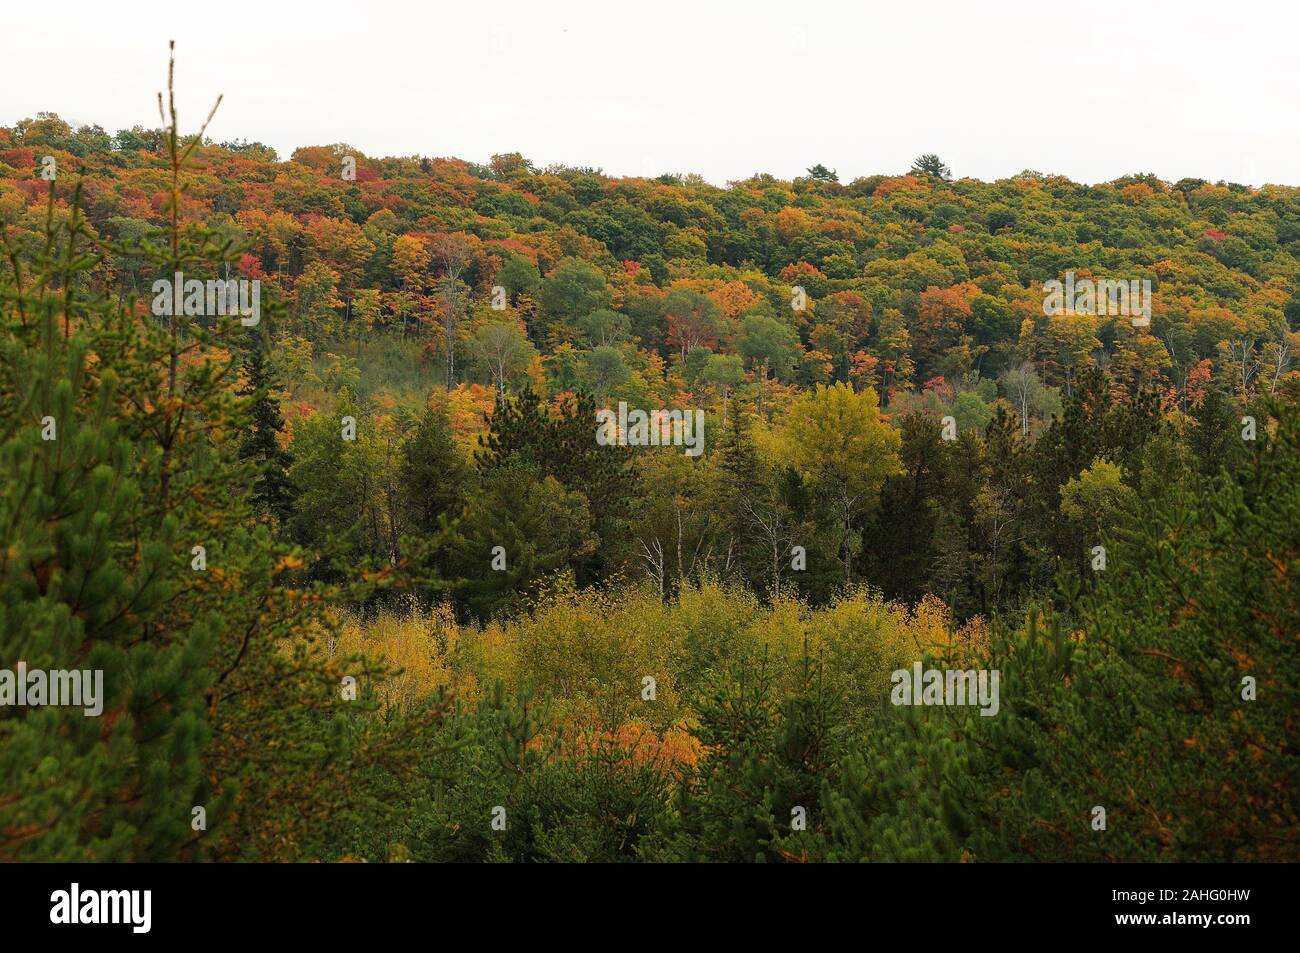 Autumn scenery landscape showing colorful nature scene. Stock Photo